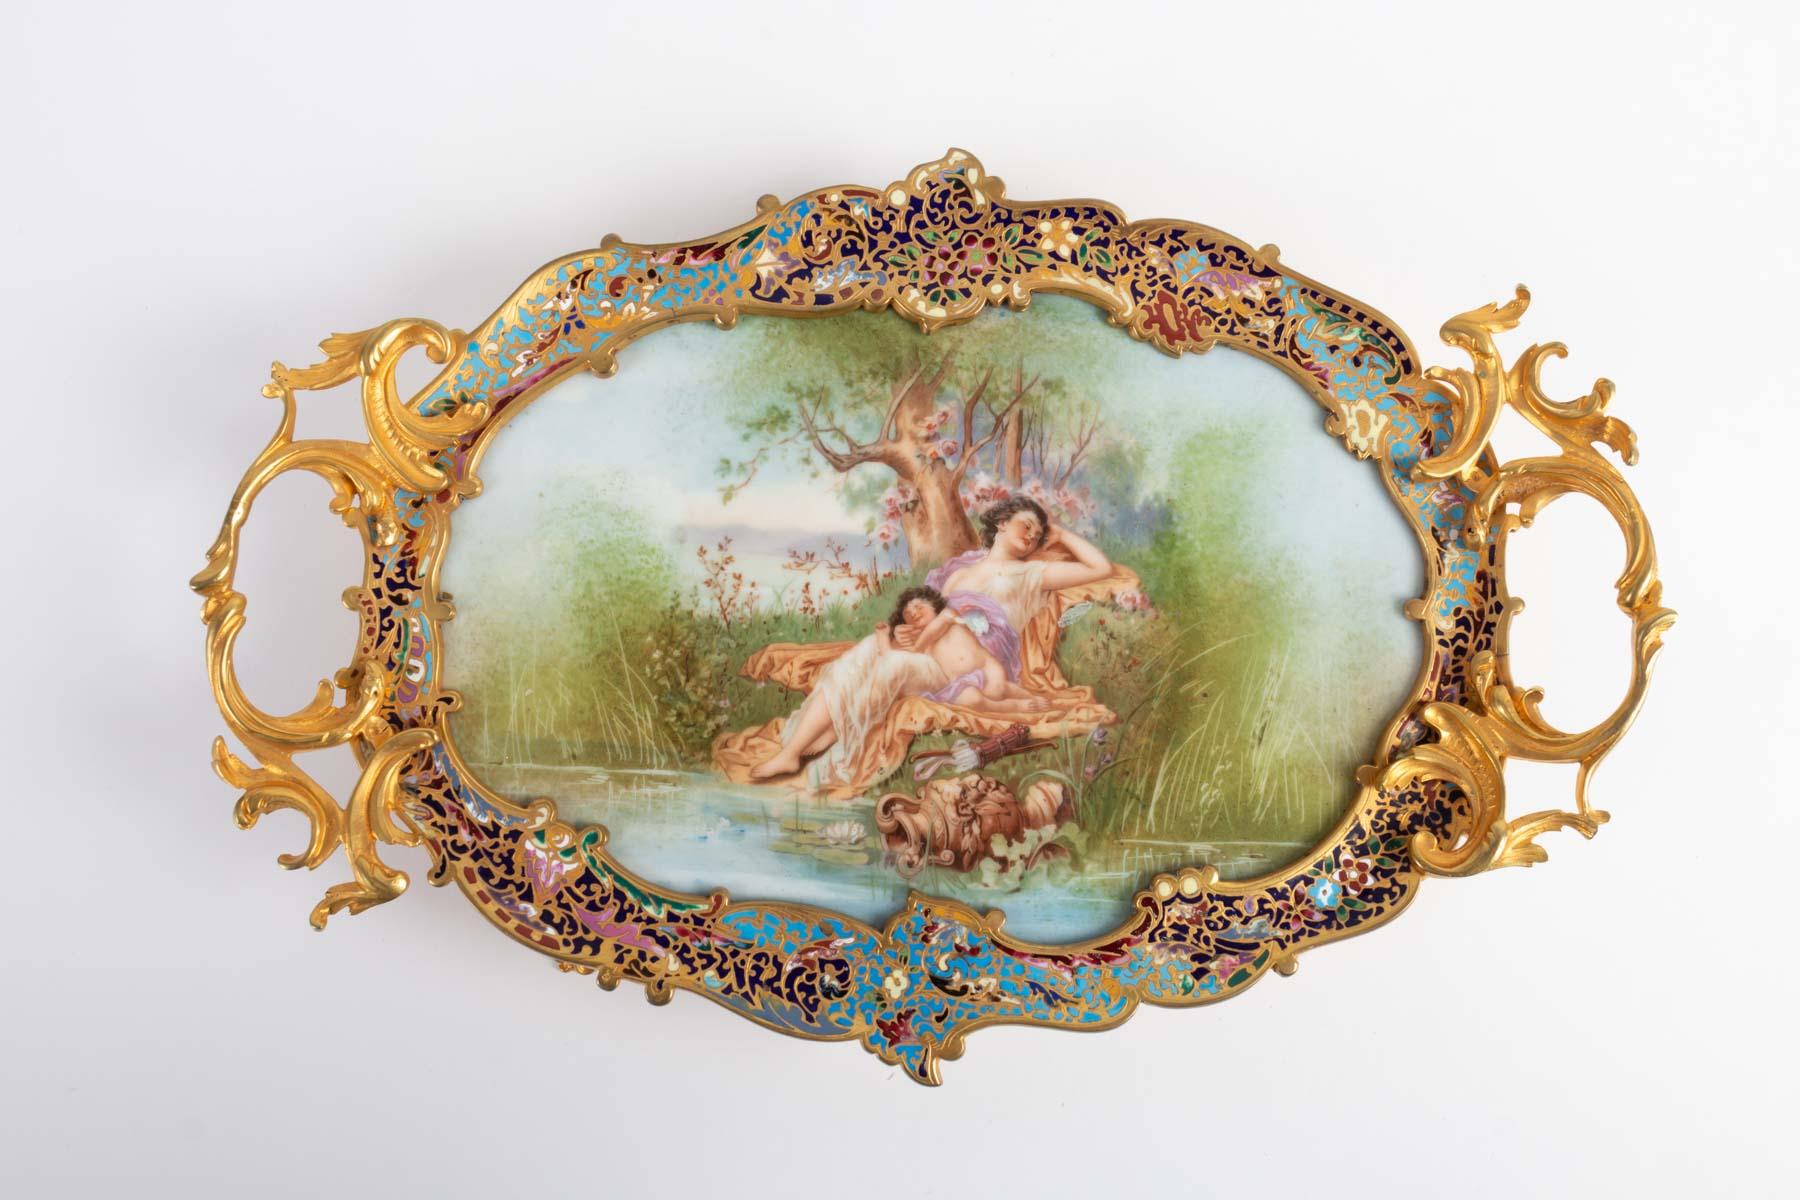 Napoleon III  Golden Bronze Cup, Porcelain and Cloisonné, 19th Century